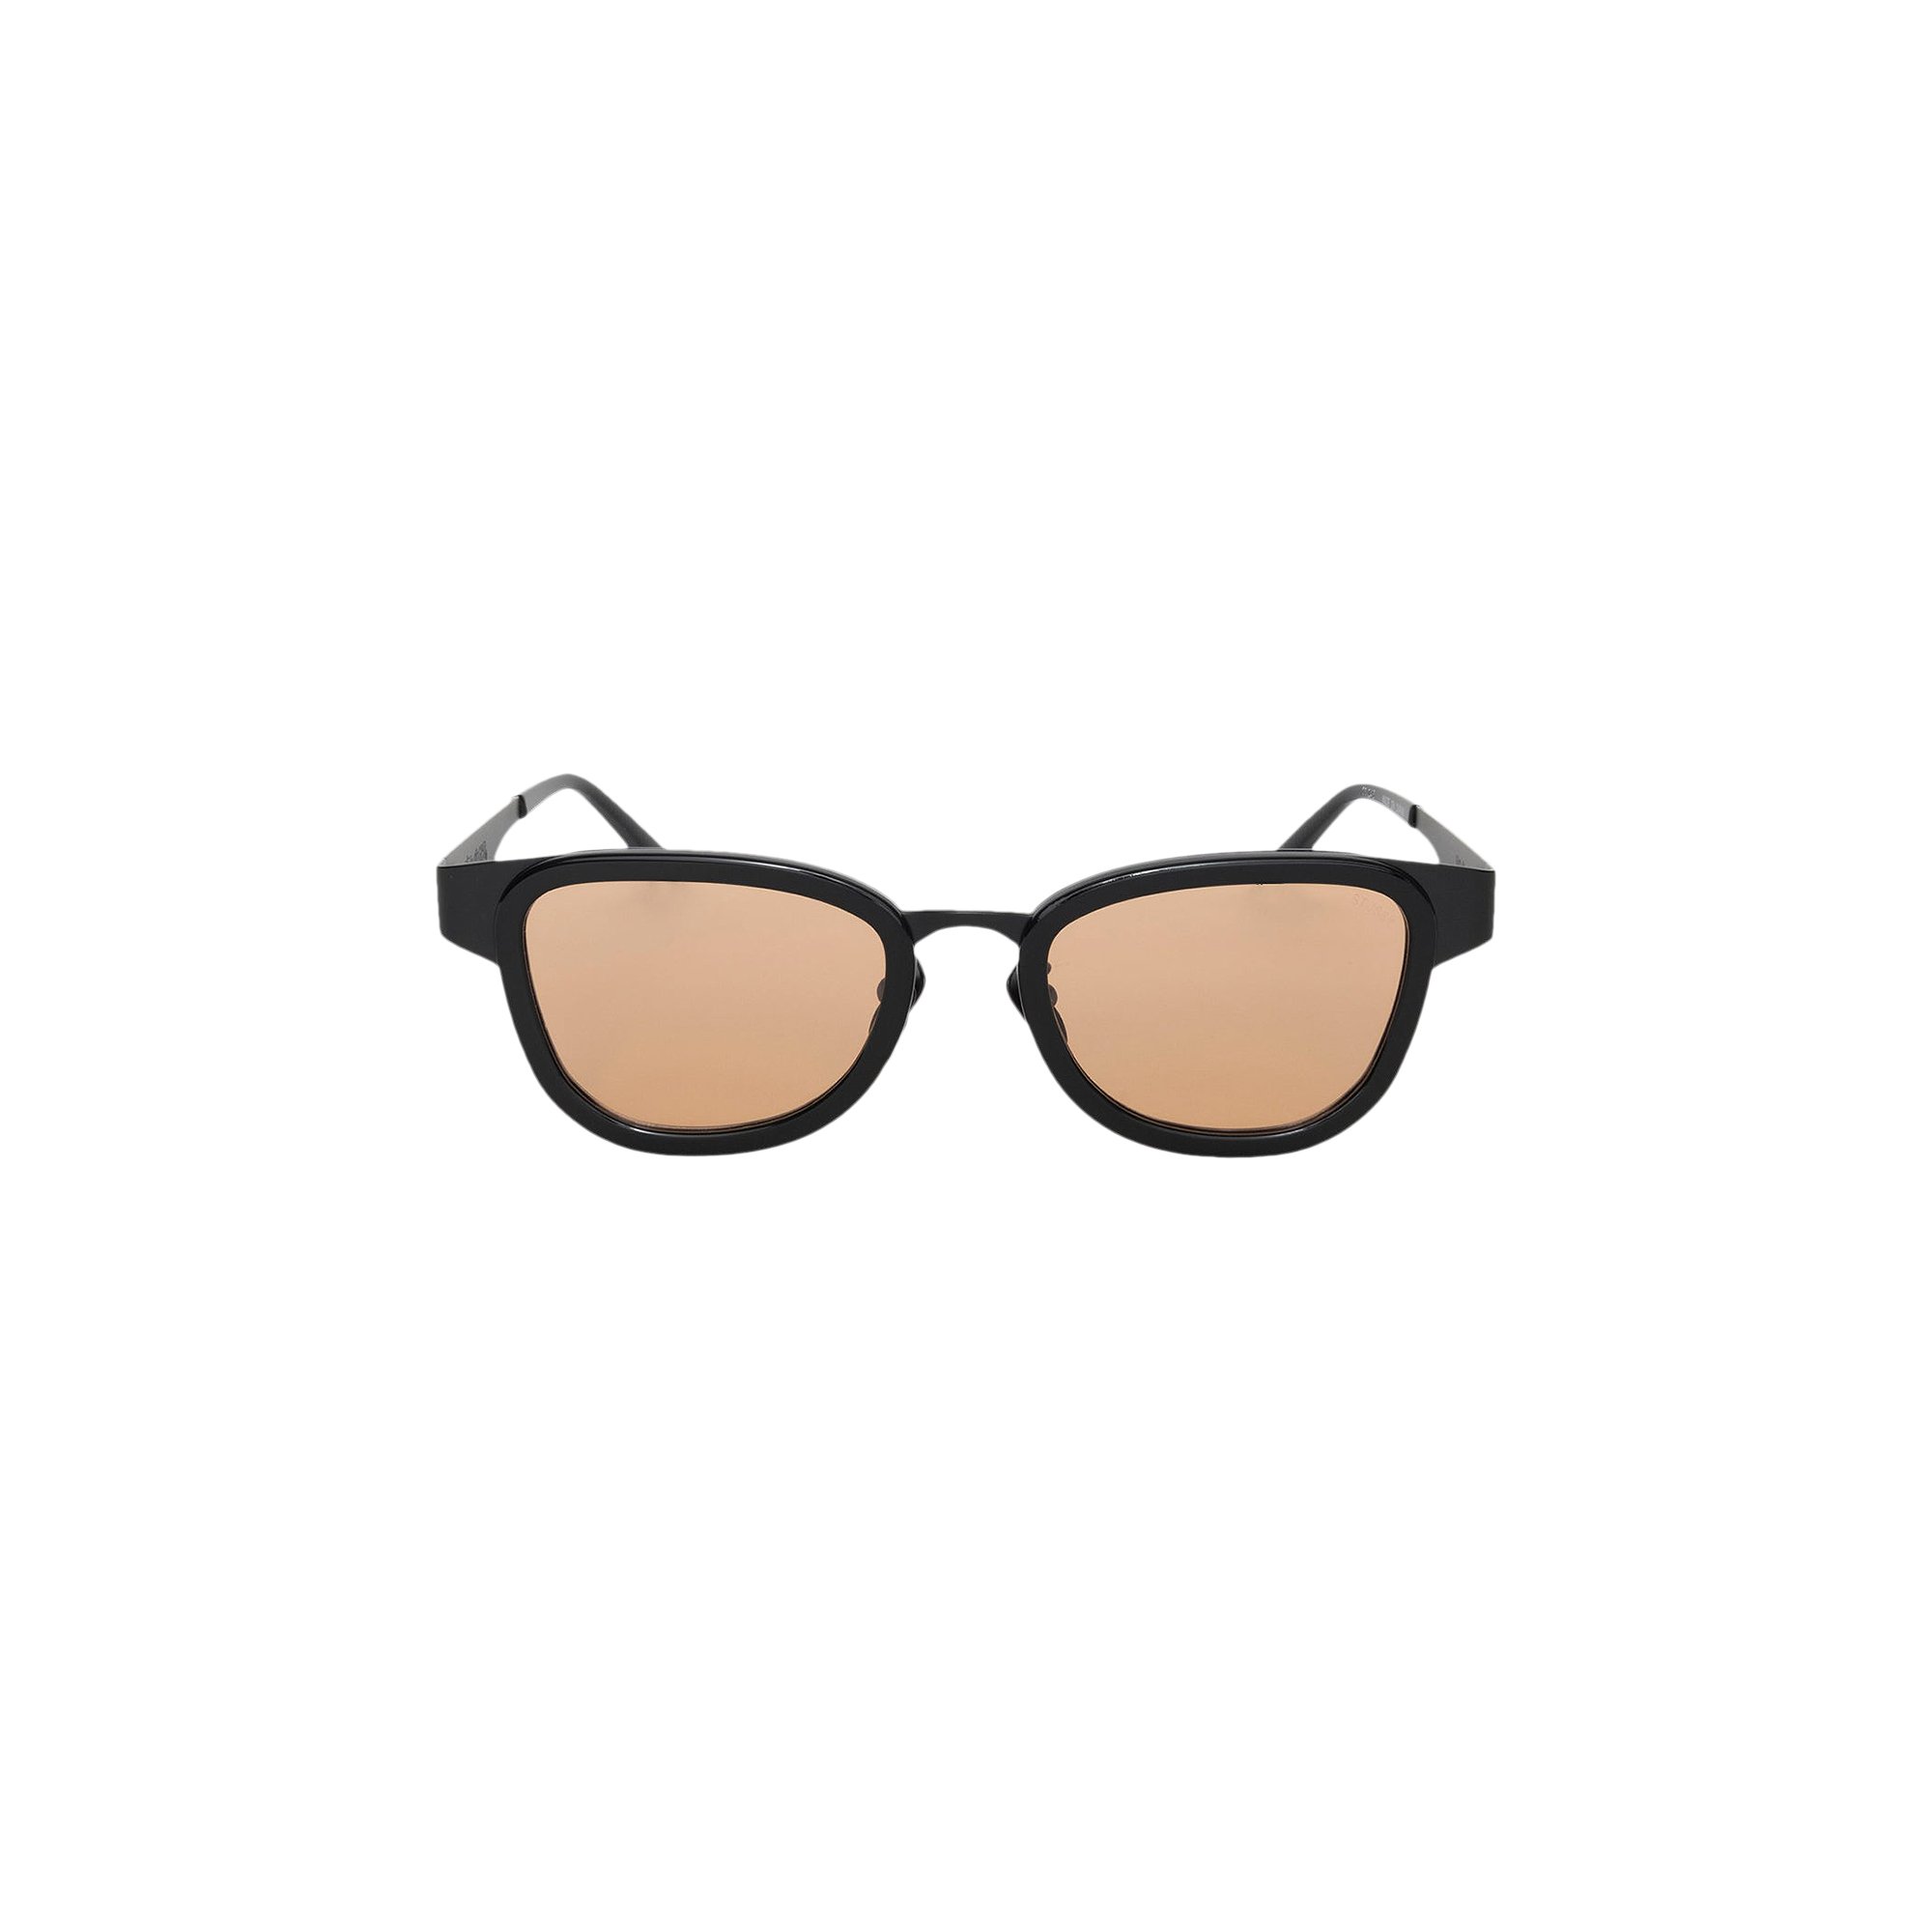 Buy Stussy Vidal Sunglasses 'Black/Amber' - 338266 BLAR | GOAT